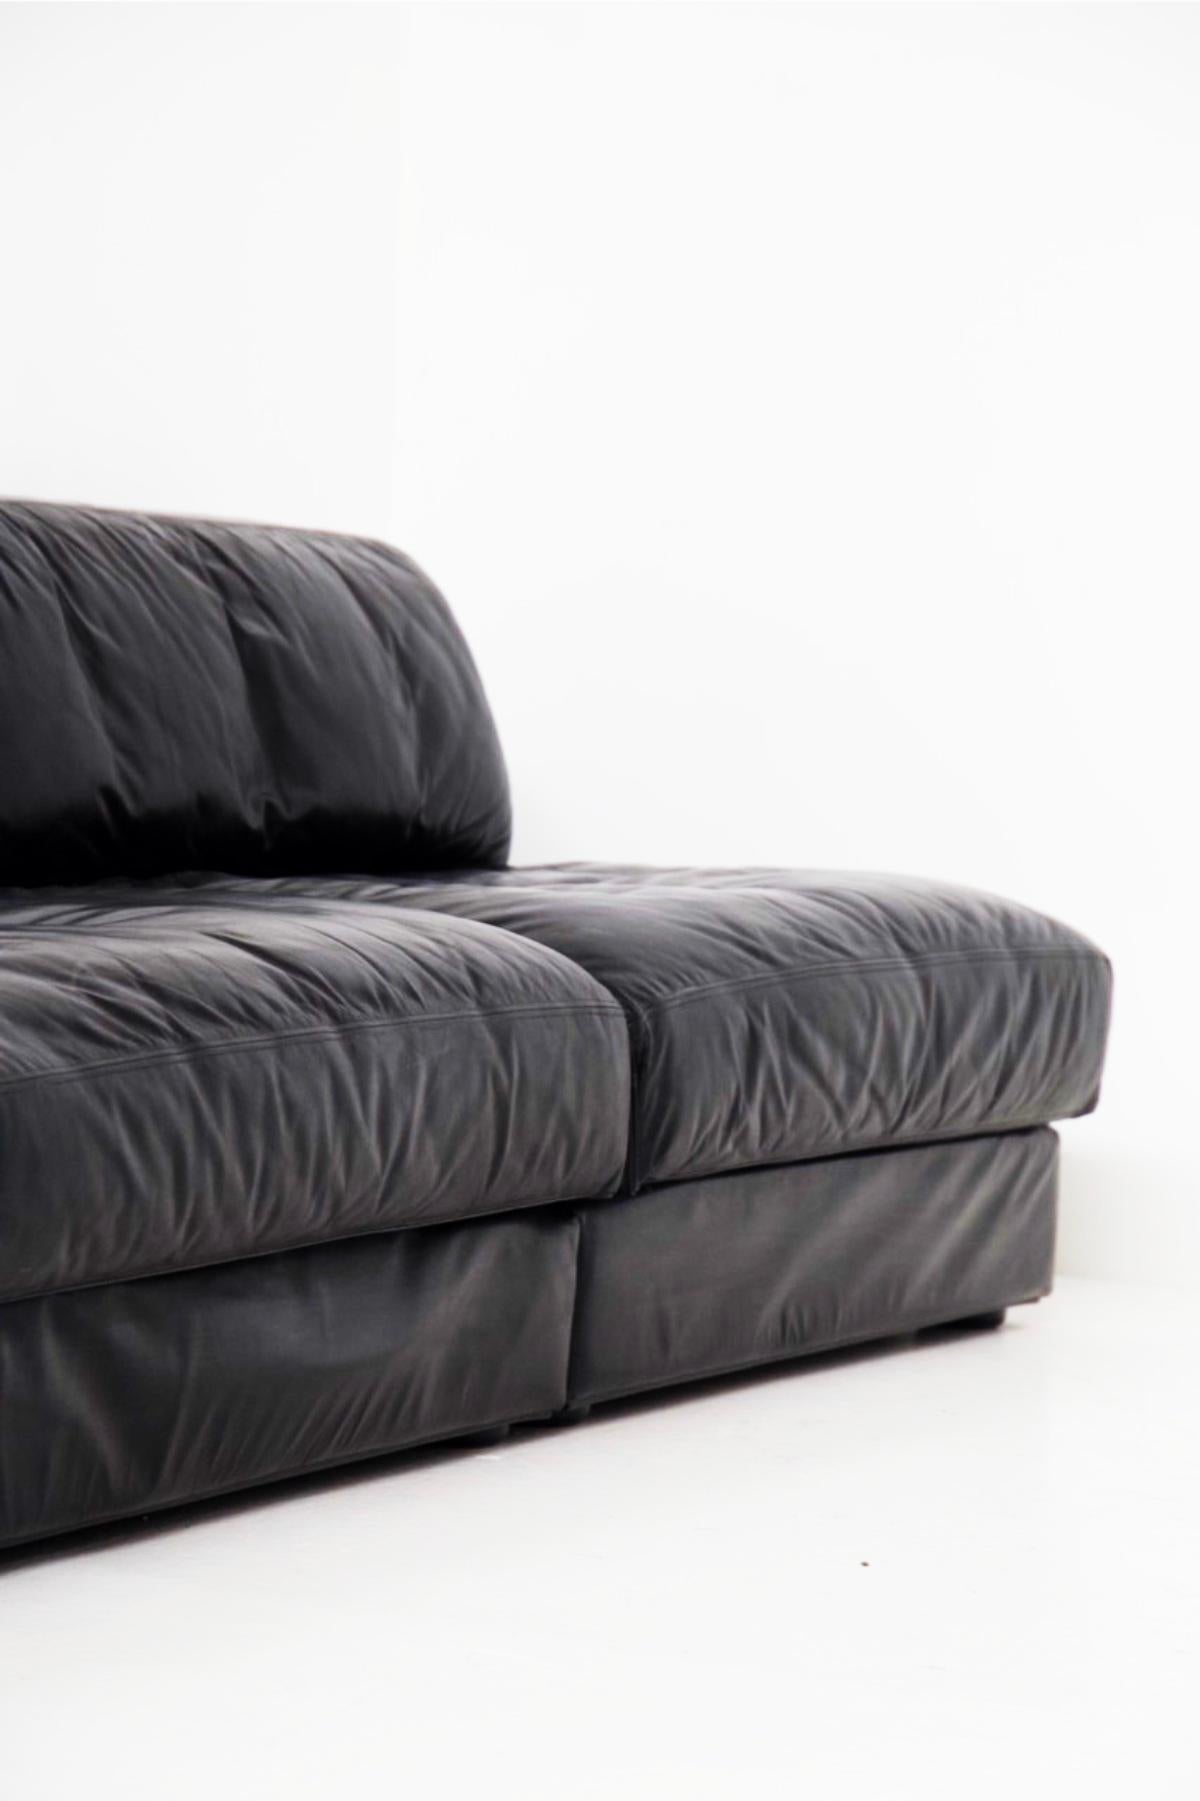 Vintage Black Leather Sofa Ds76 Sofart 3